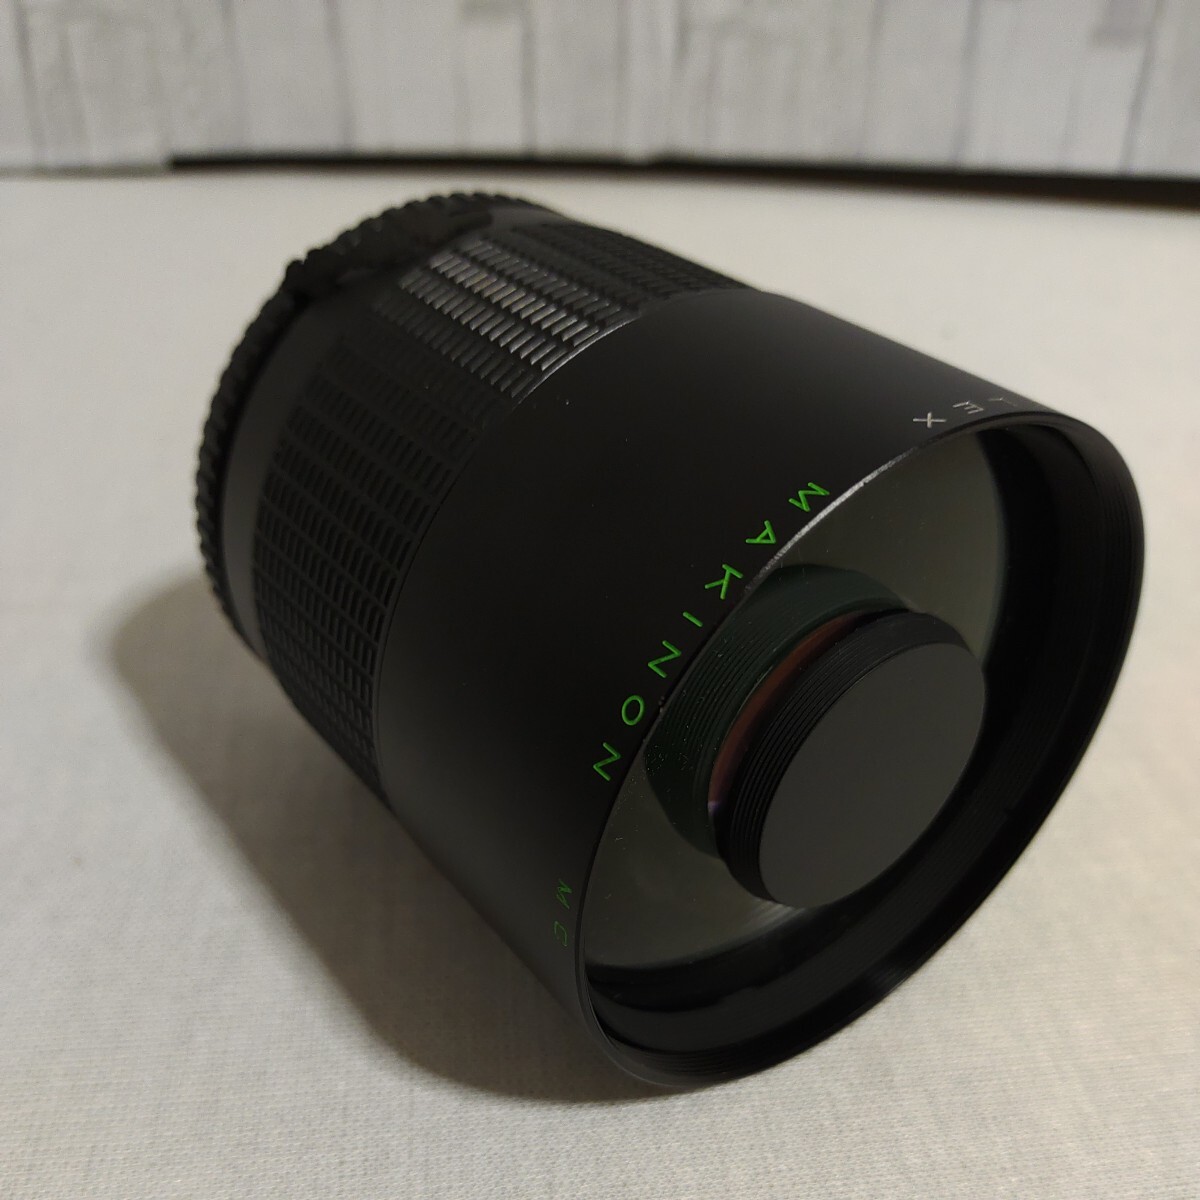 F0011 REFLEX MAKINON MC lens 